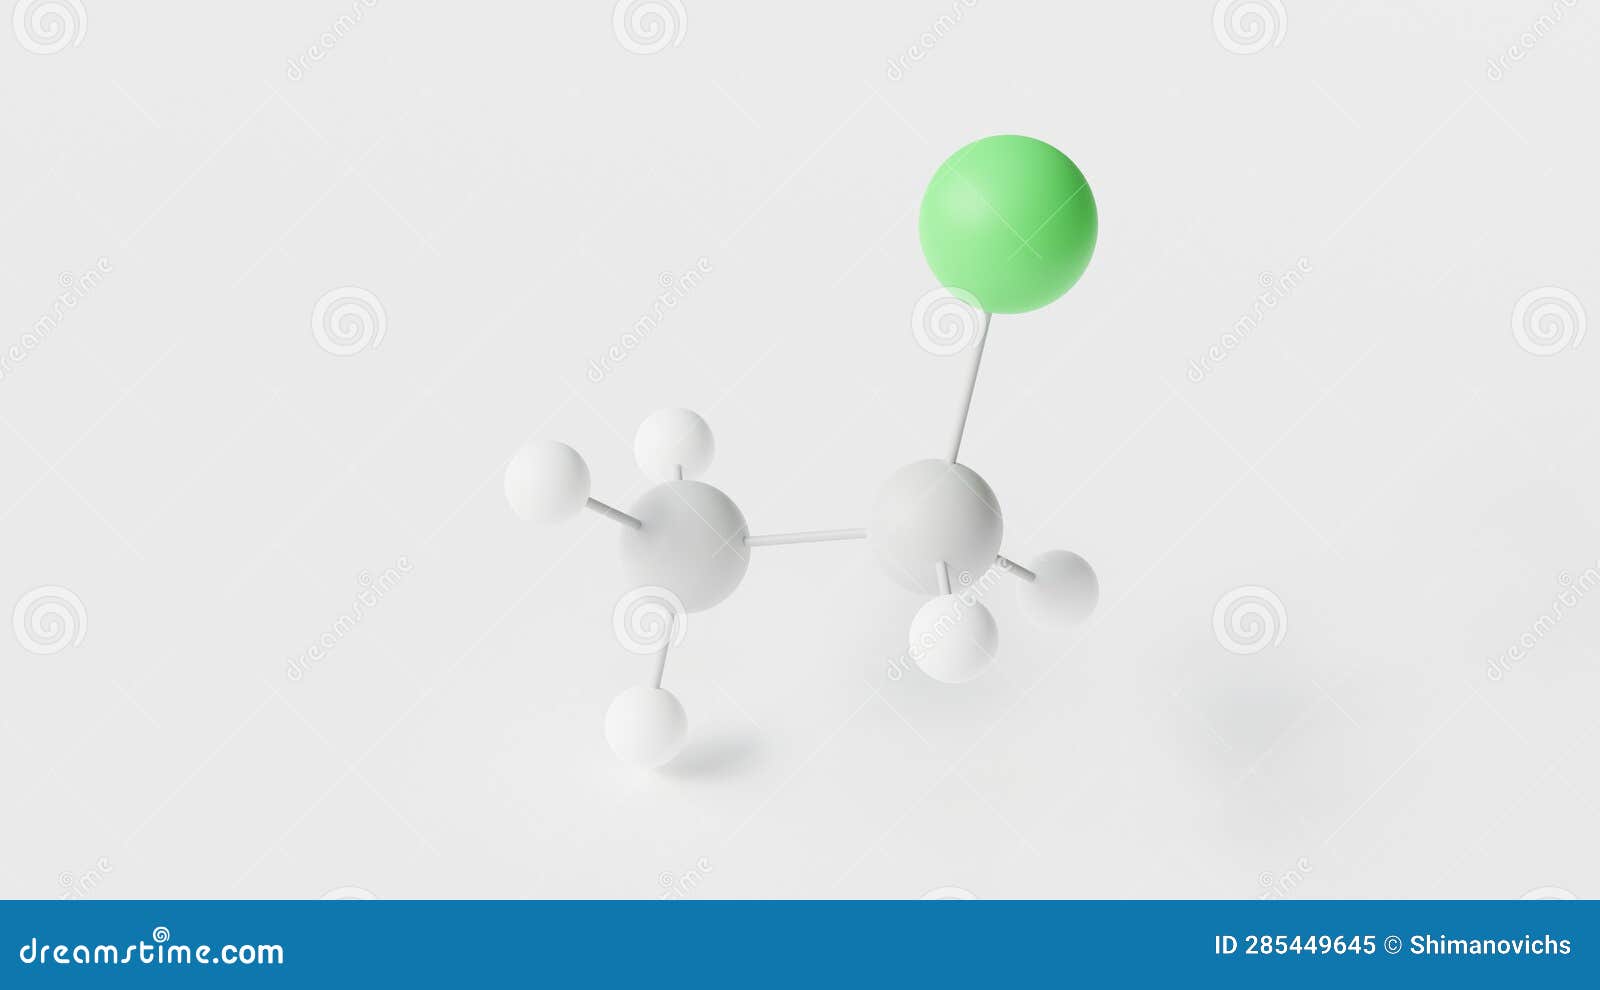 Chloroethane Molecule 3d, Molecular Structure, Ball and Stick Model ...